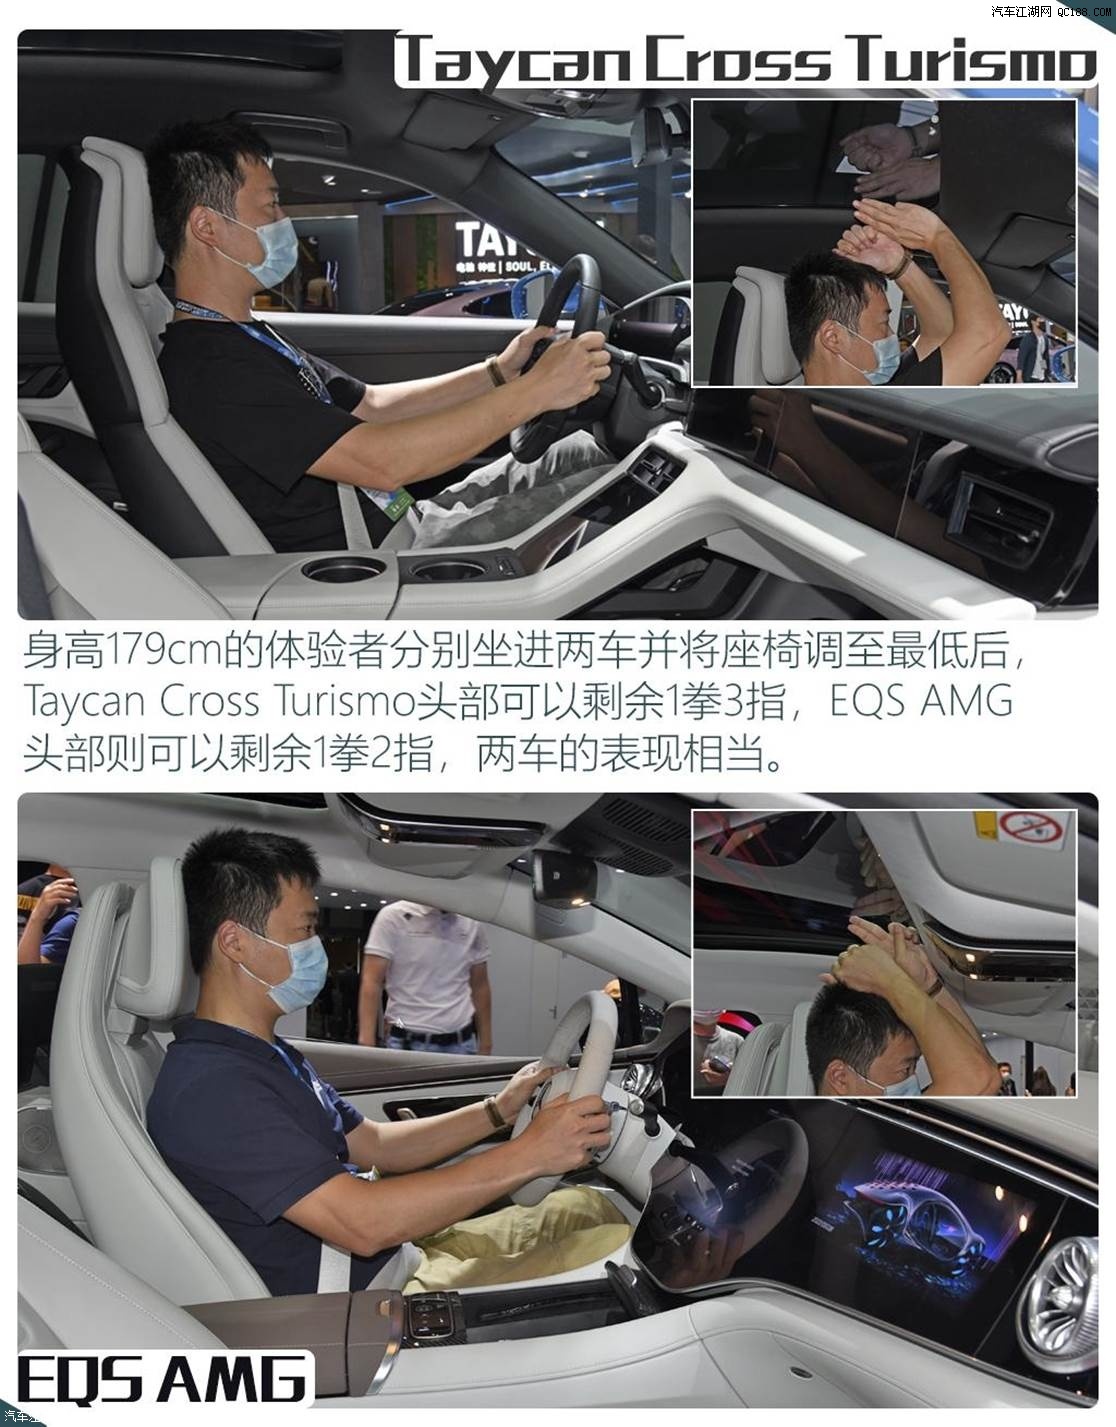 百万级 Taycan Cross Turismo对EQS AMG